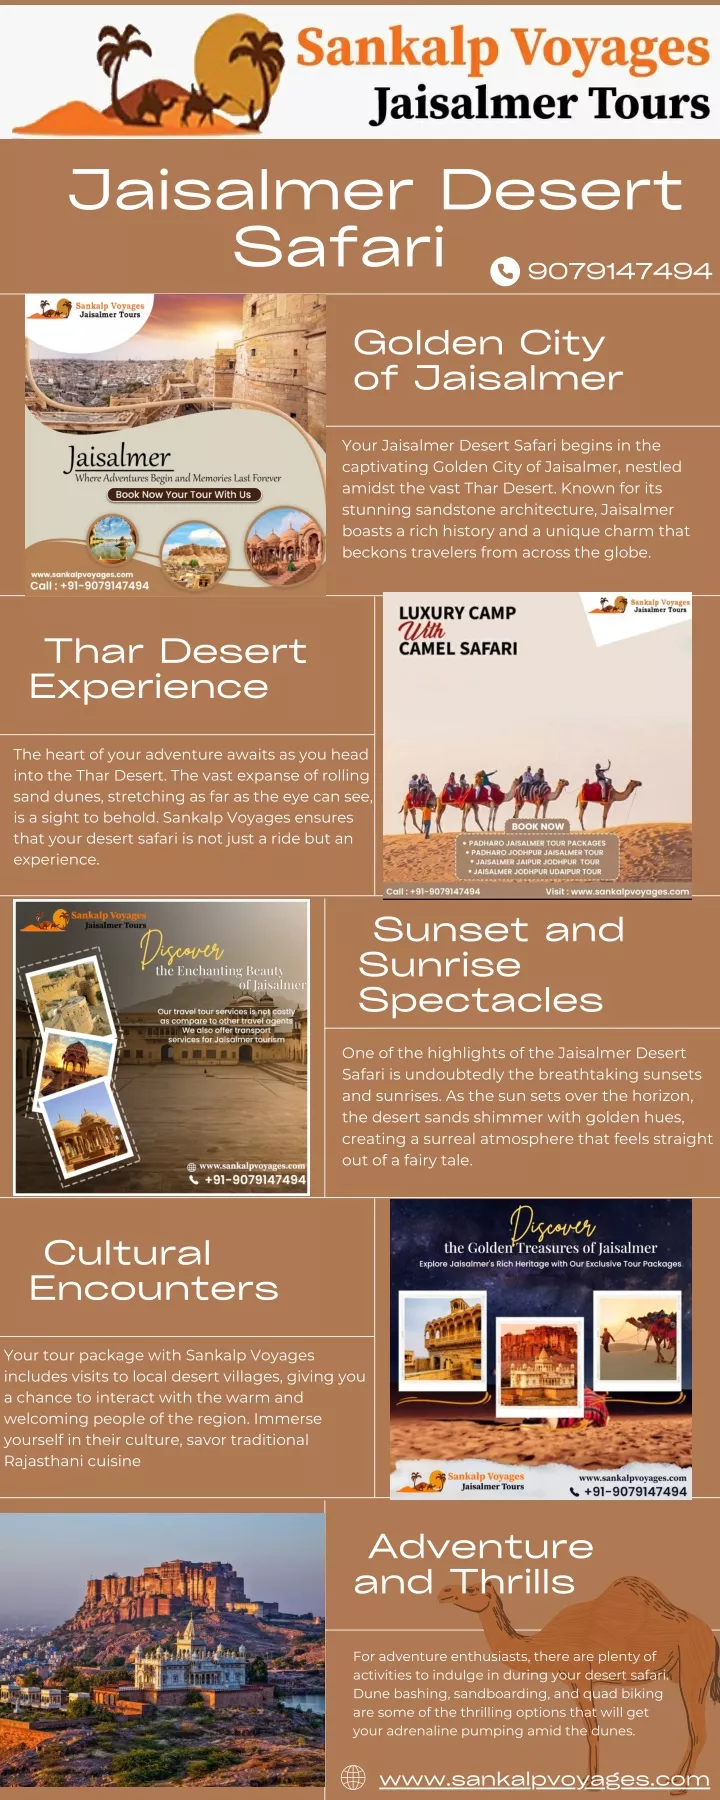 jaisalmer desert safari